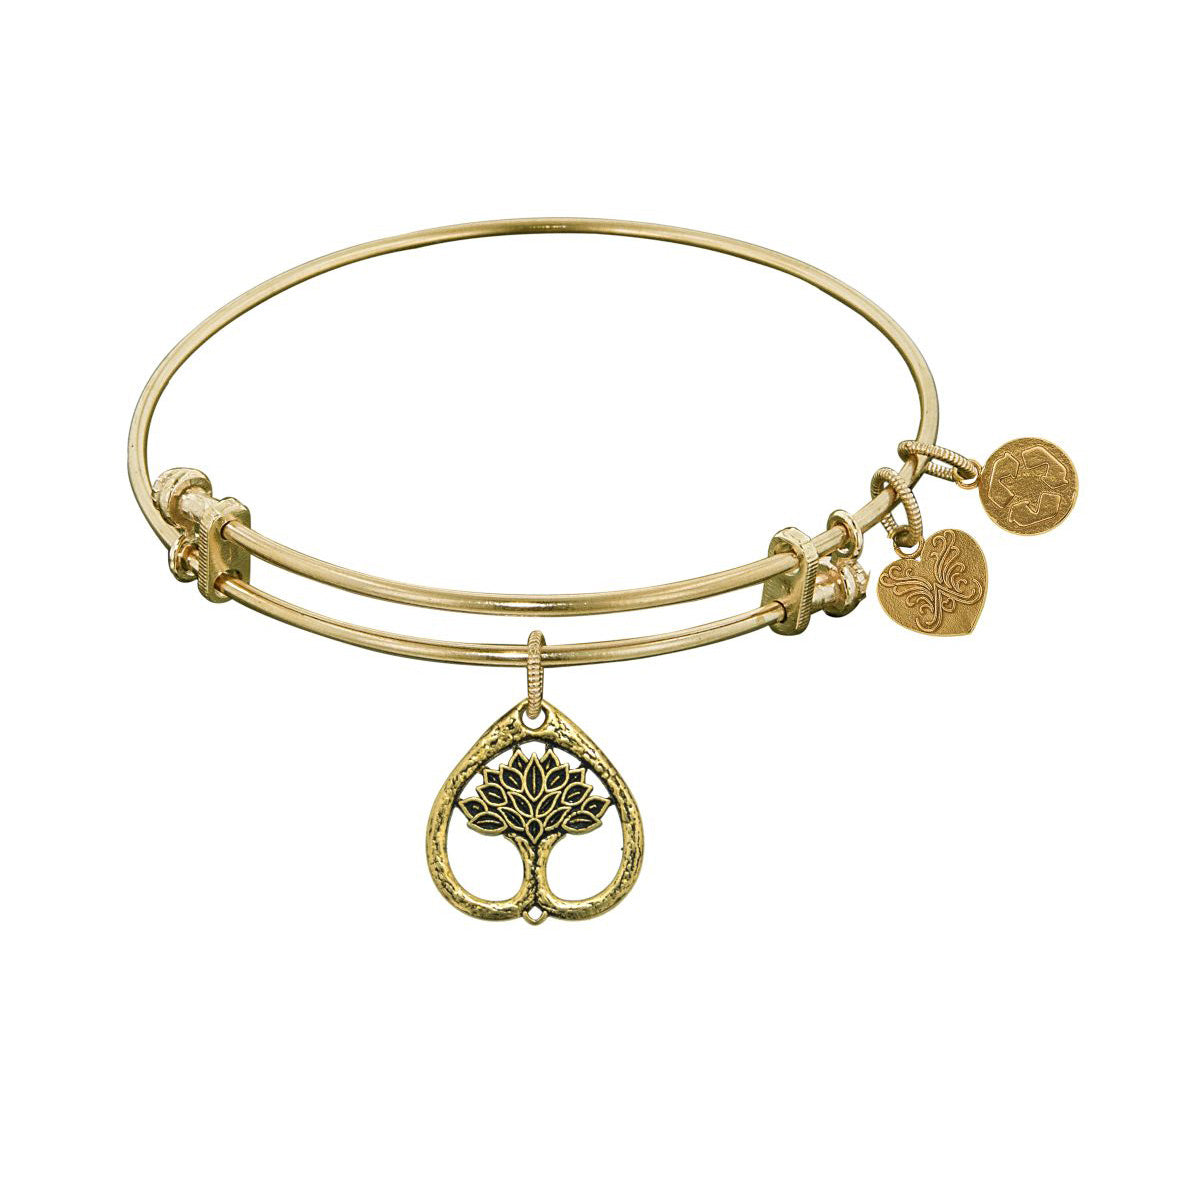 Stipple Finish Brass Tree Of Life Angelica Bangle Bracelet, 7.25" fine designer jewelry for men and women